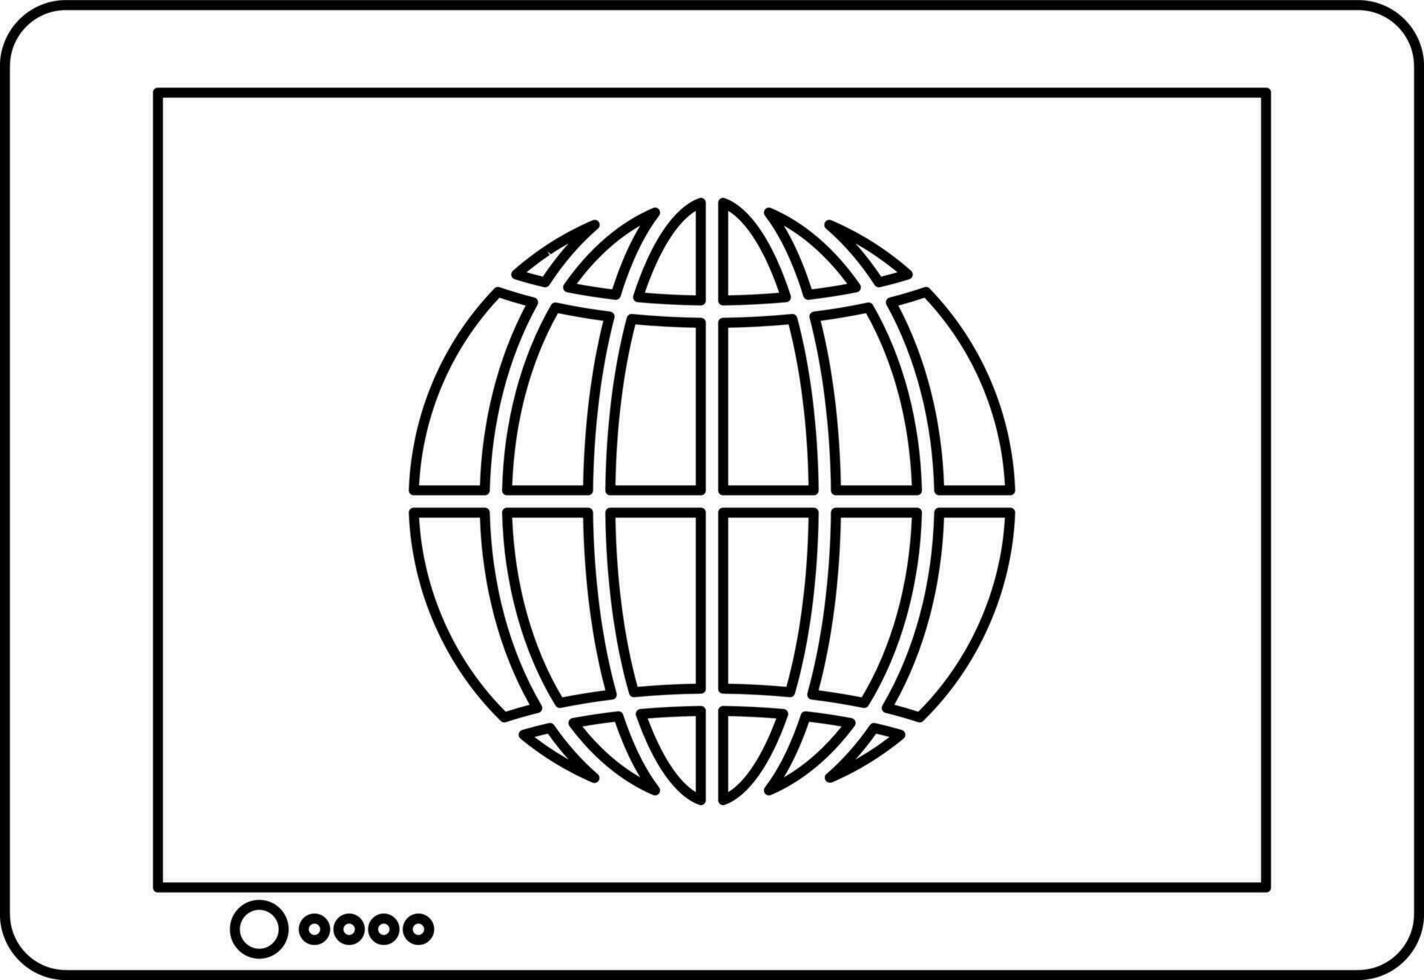 global im Tablette Symbol. vektor